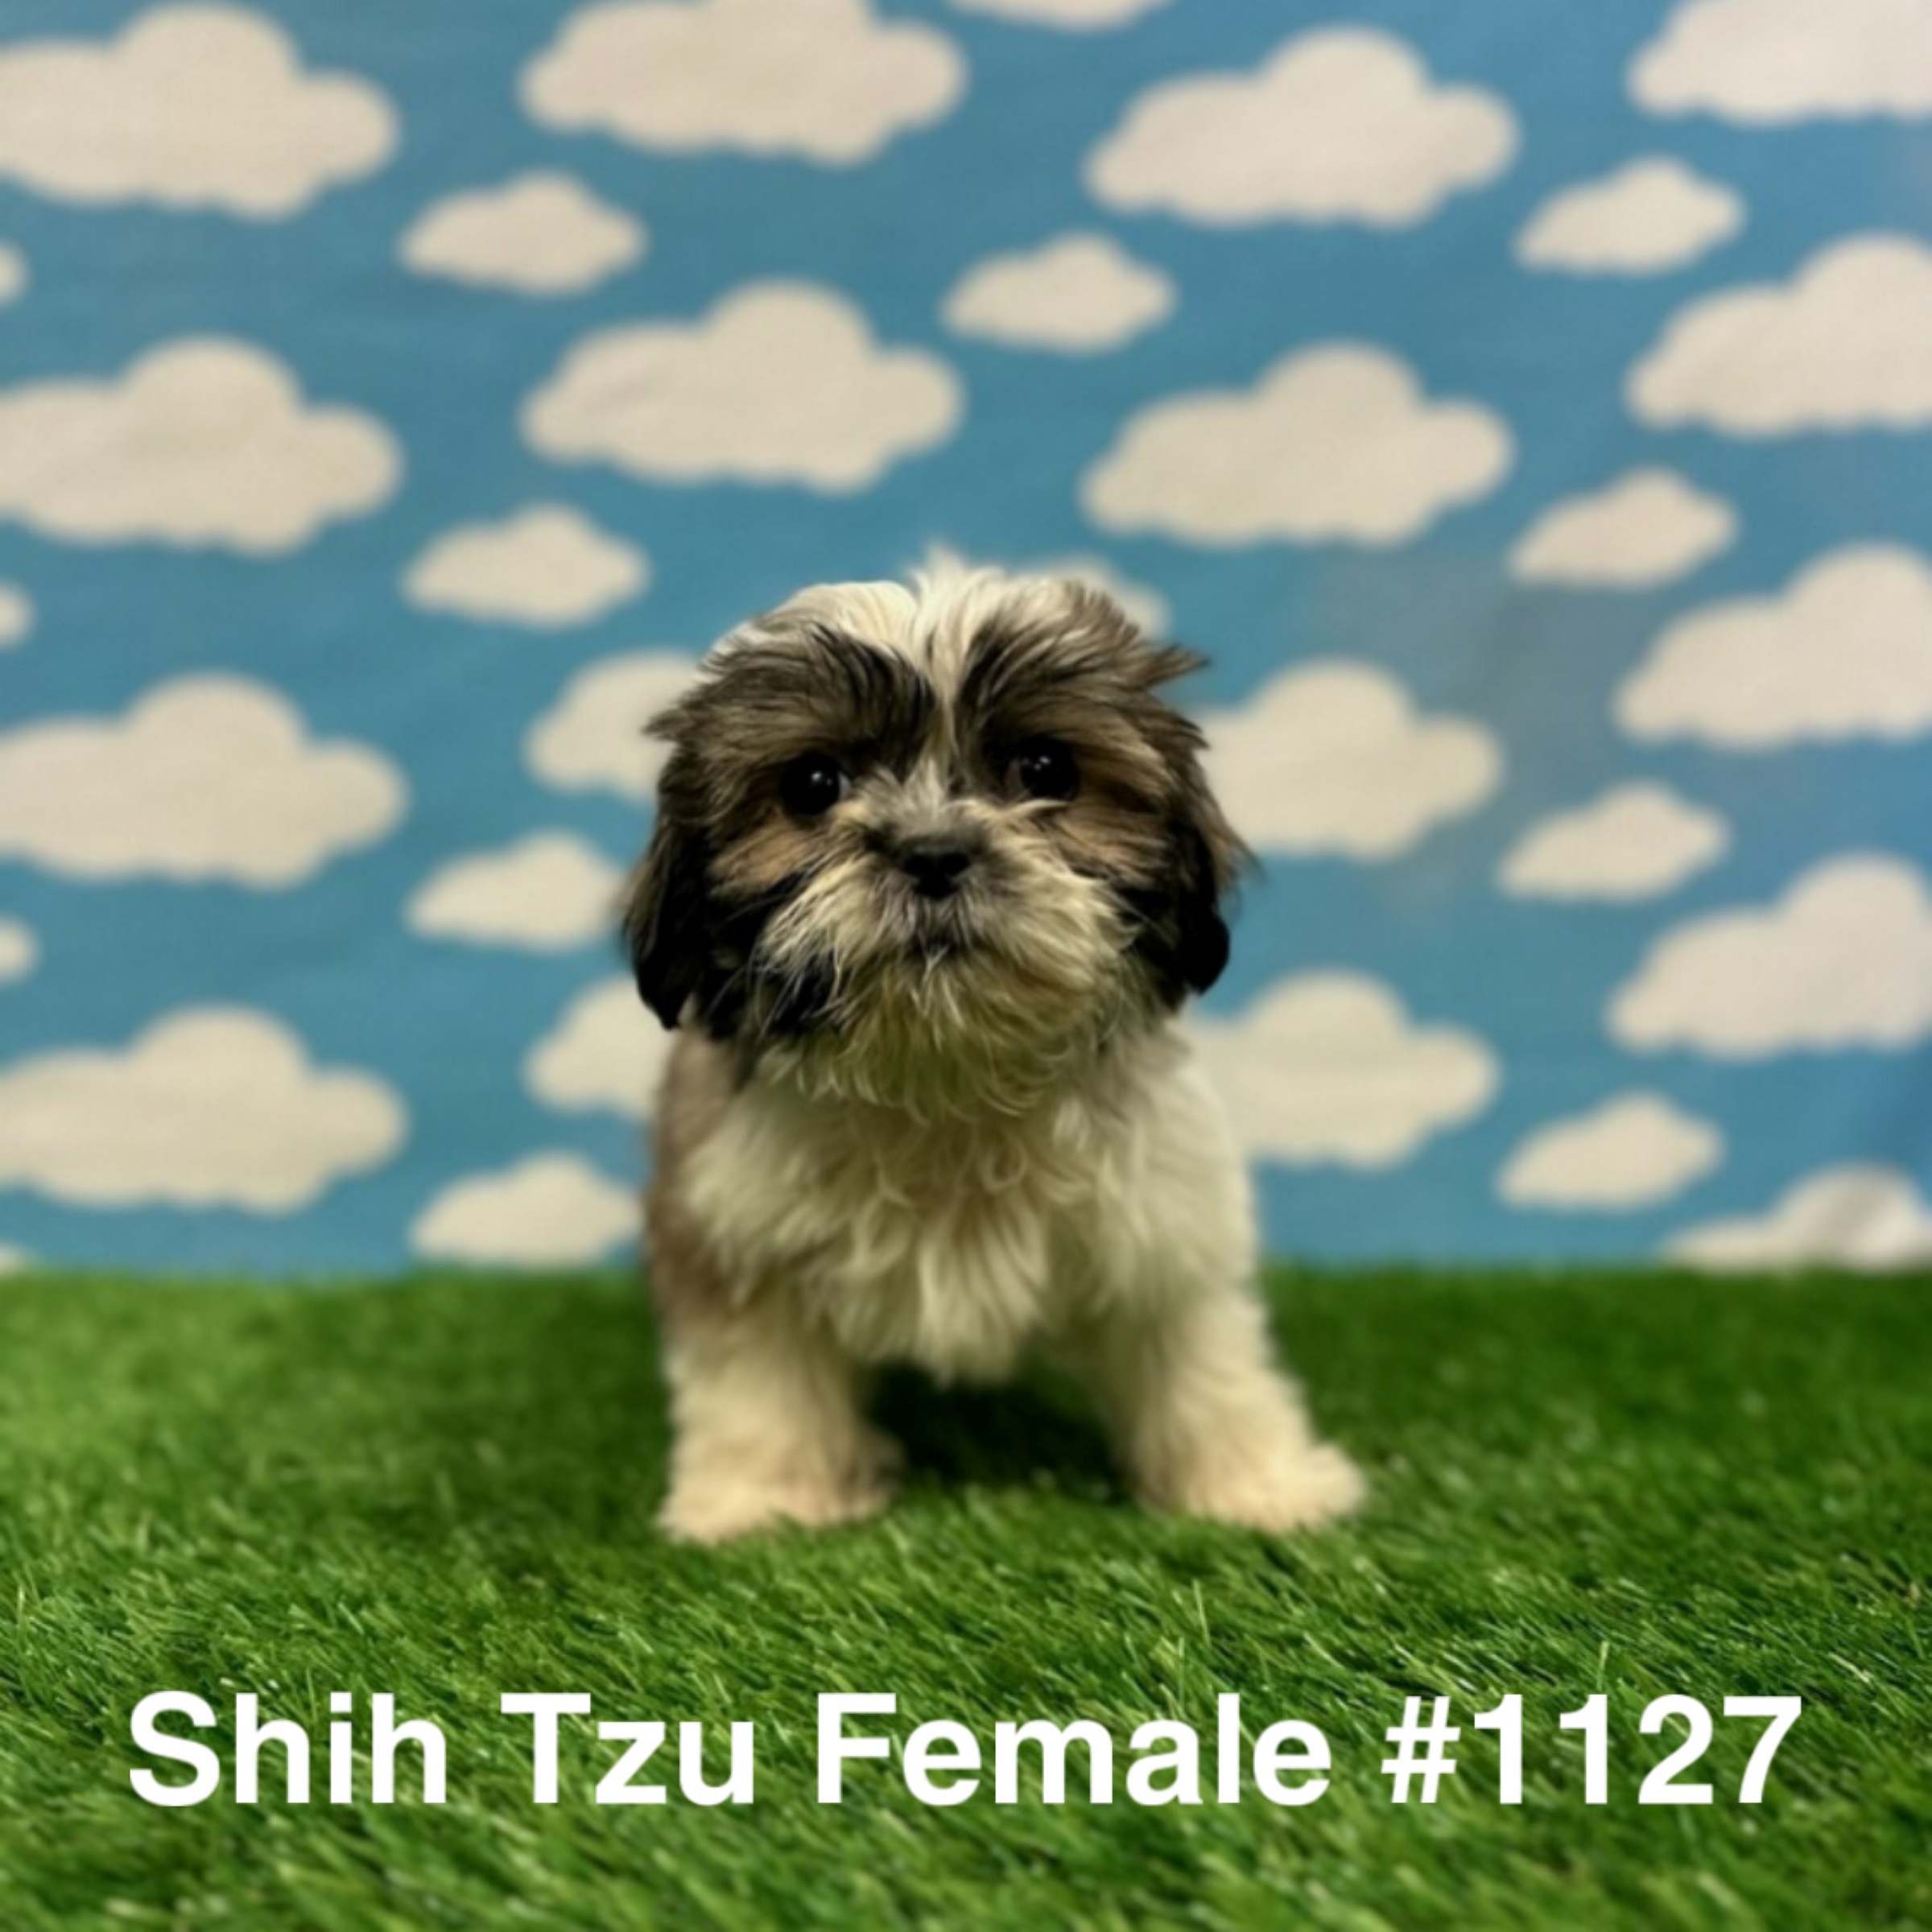 Shih Tzu - Just Pets